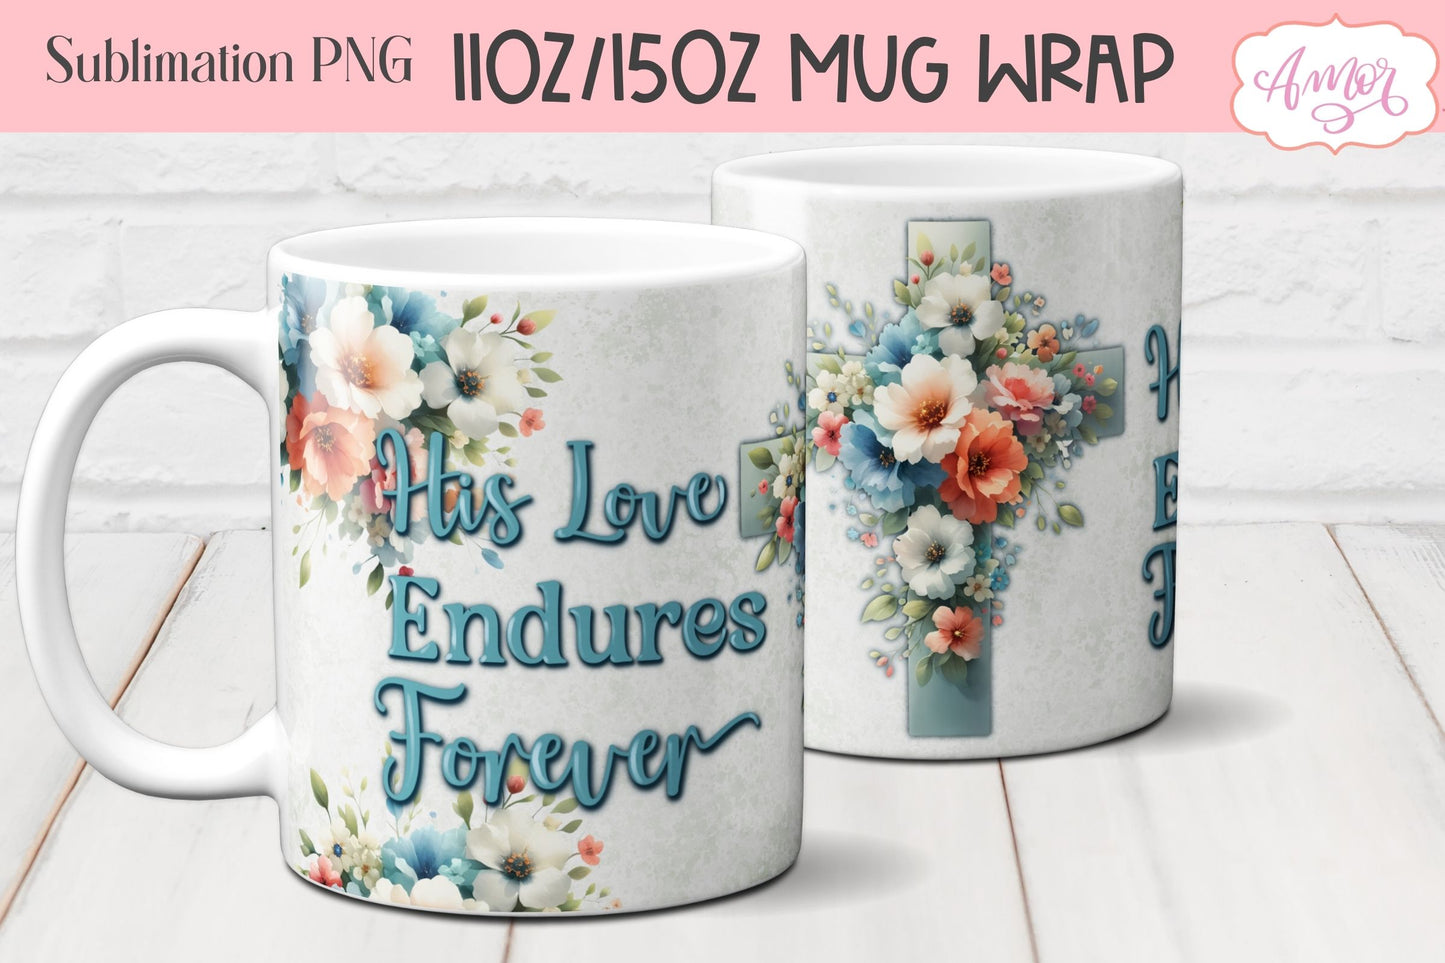 Christian Easter mug Wrap for sublimation for 11oz and 15oz